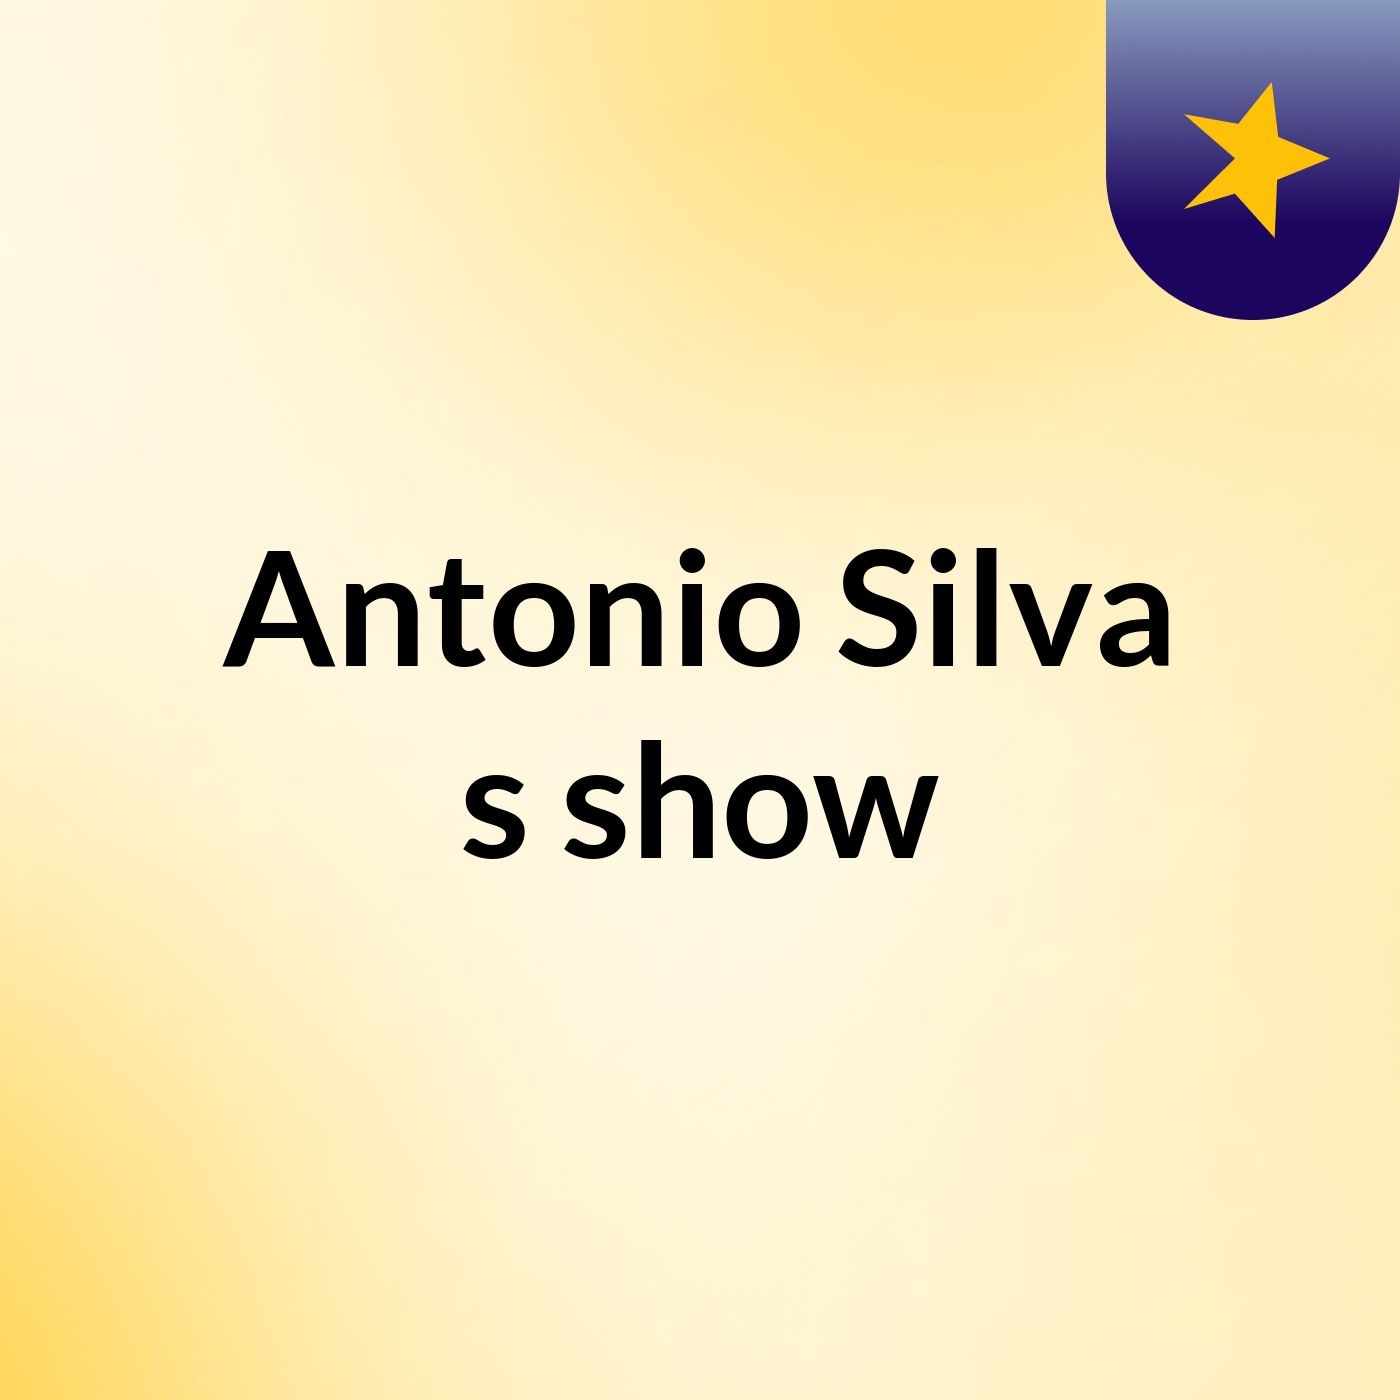 Antonio Silva's show